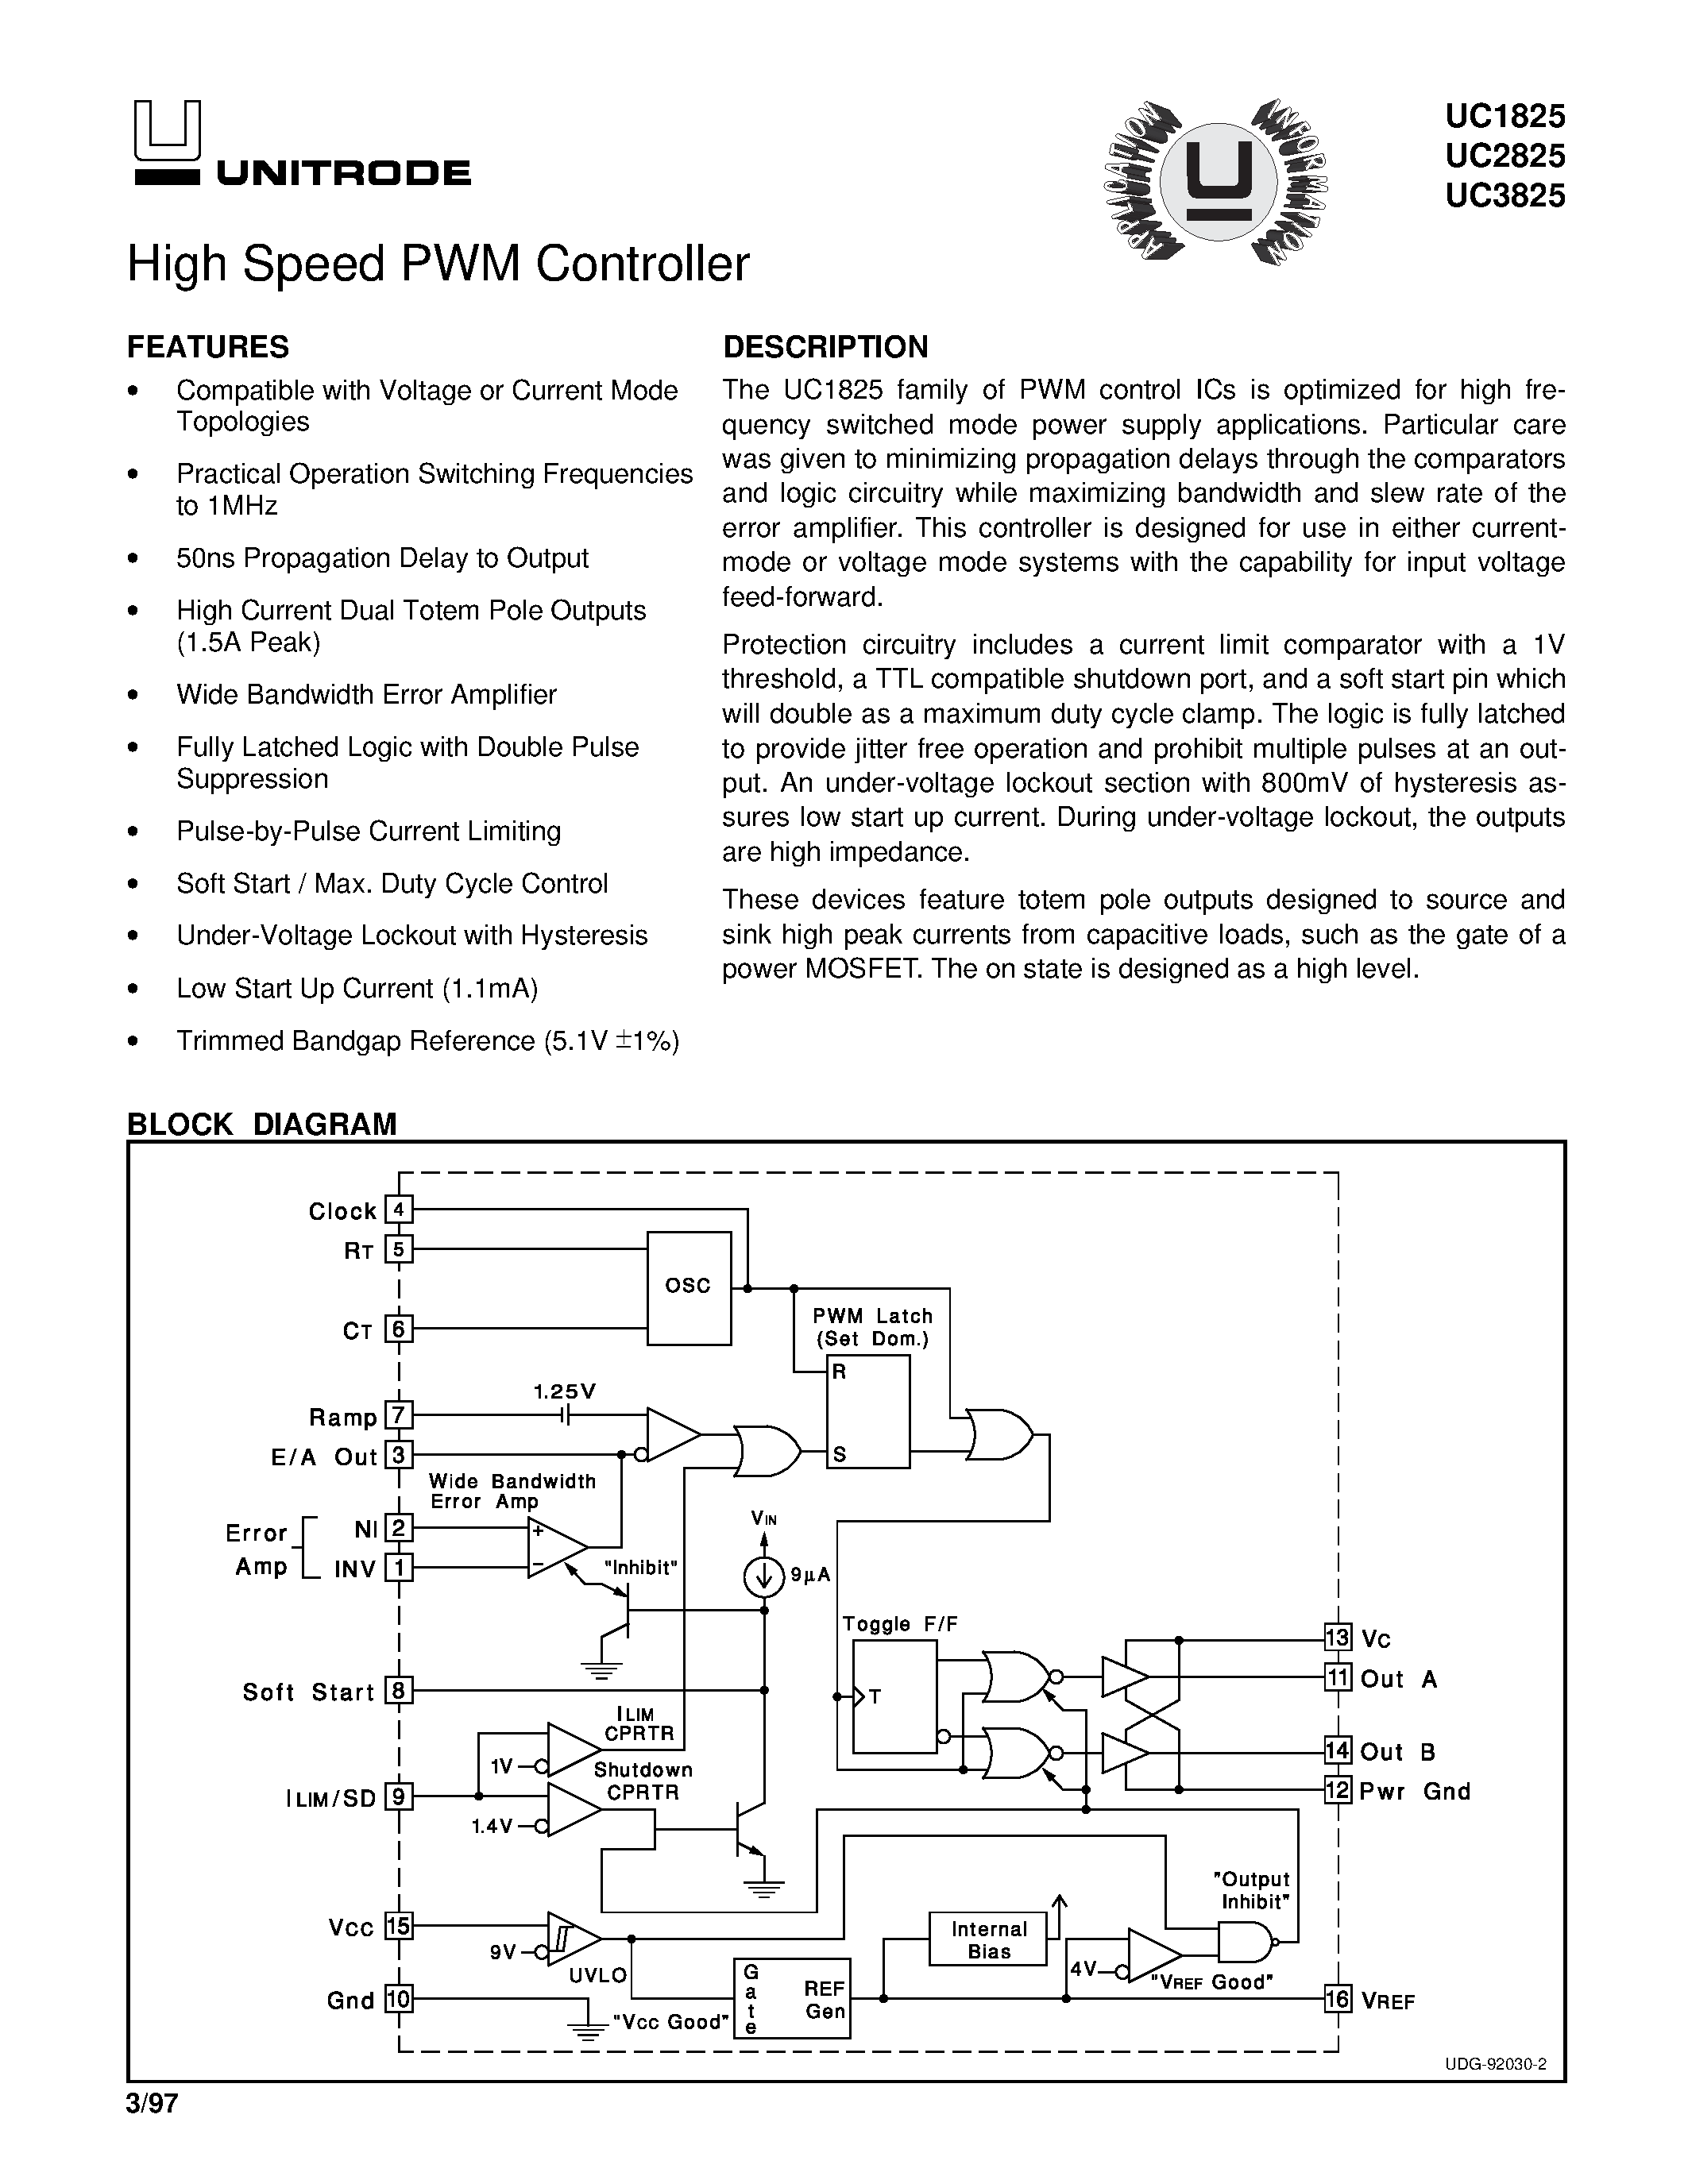 Datasheet UC2825 - High Speed PWM Controller page 1